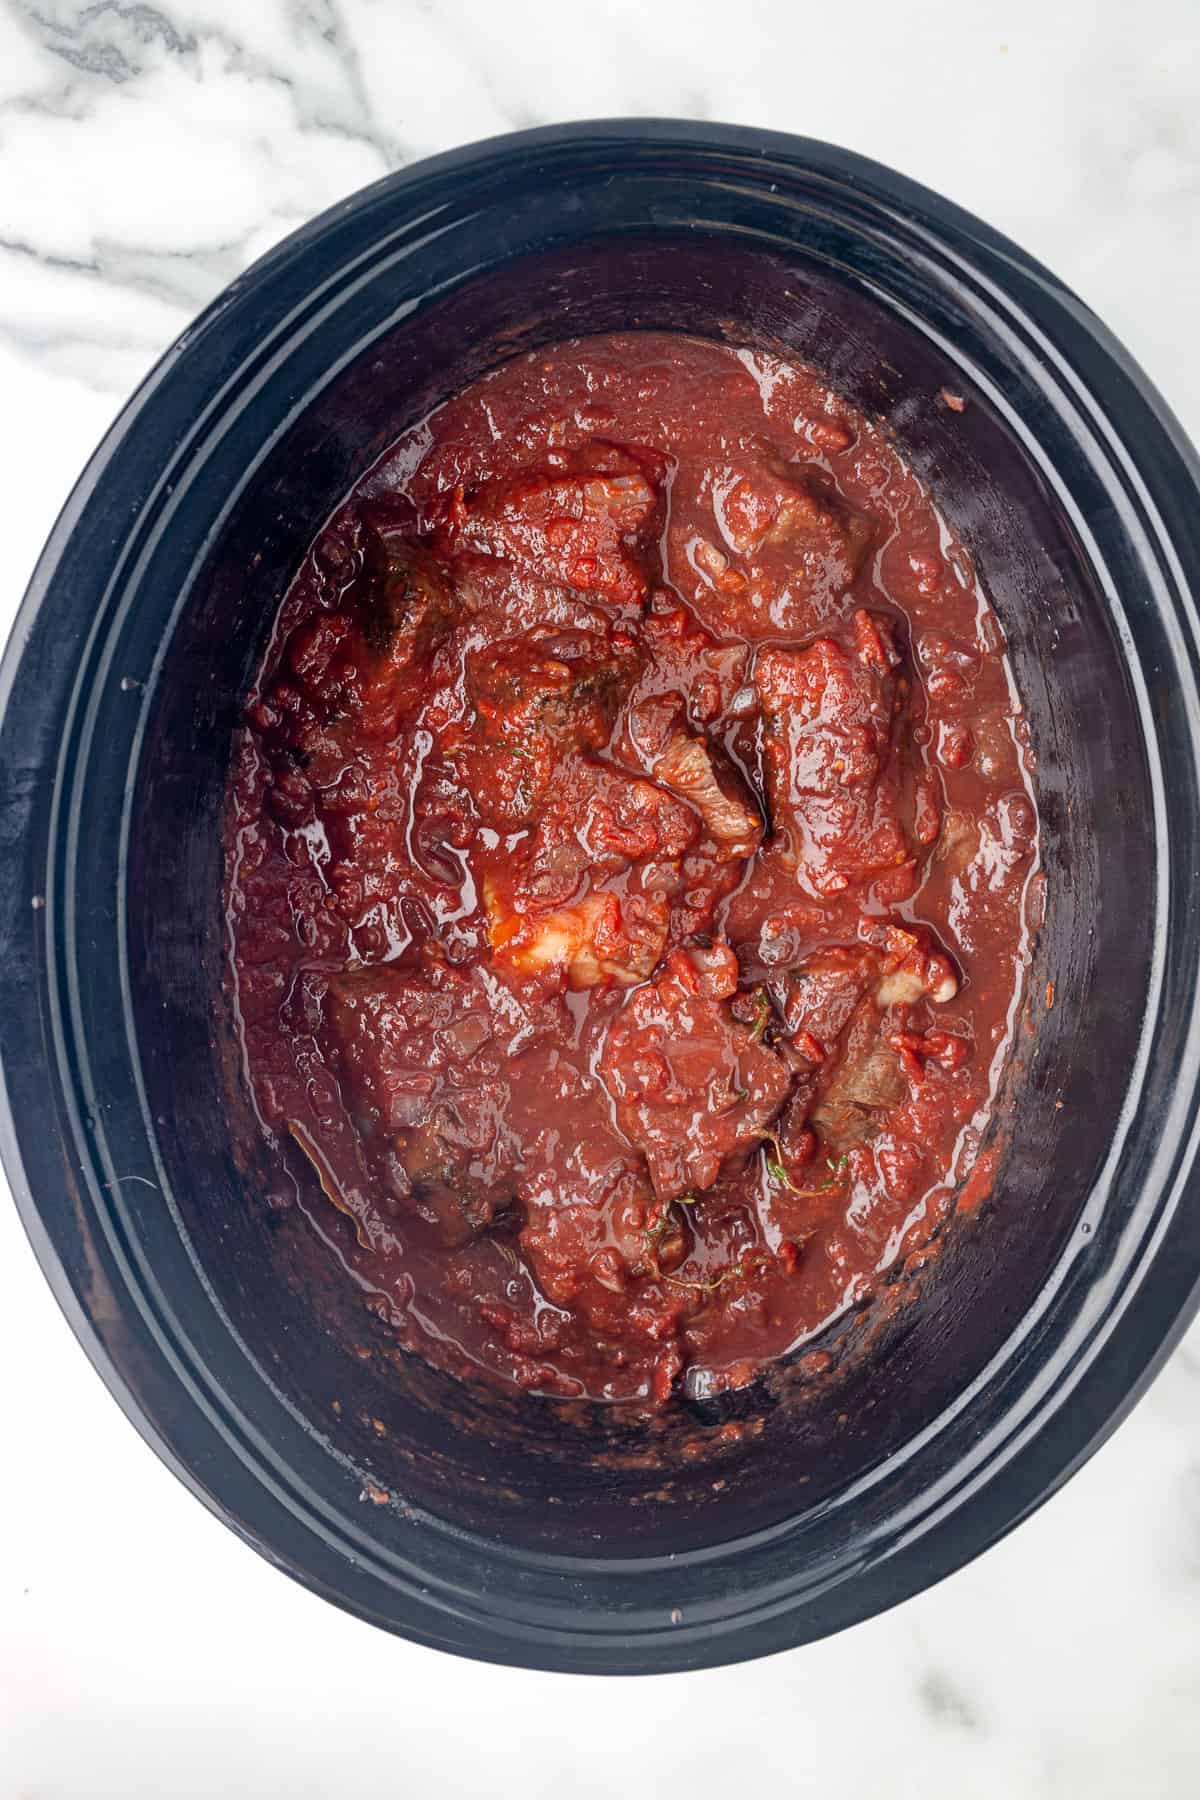 a crockpot full of meat sauce.